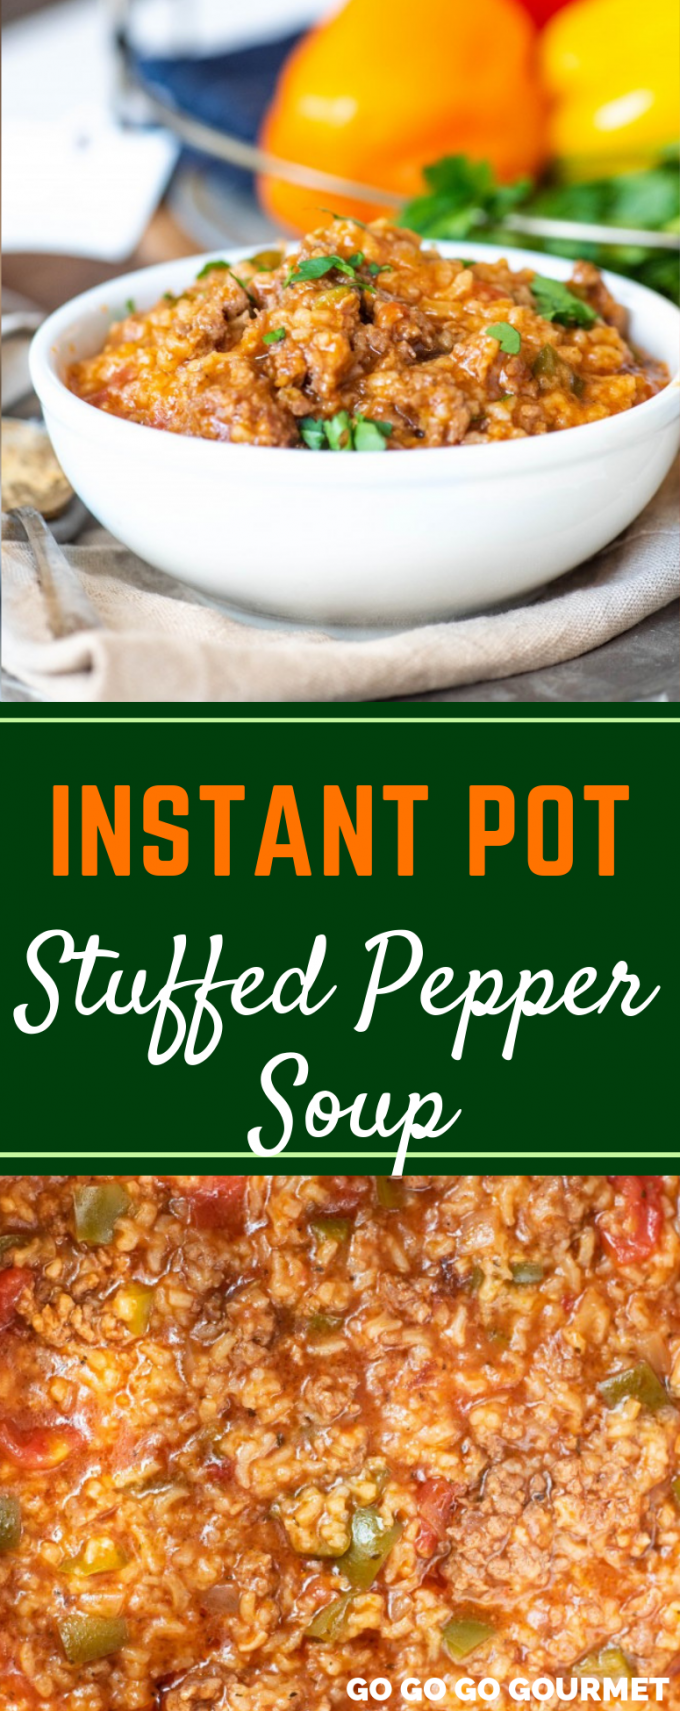 Stuffed Pepper Soup - Instant Pot Stuffed Pepper Soup